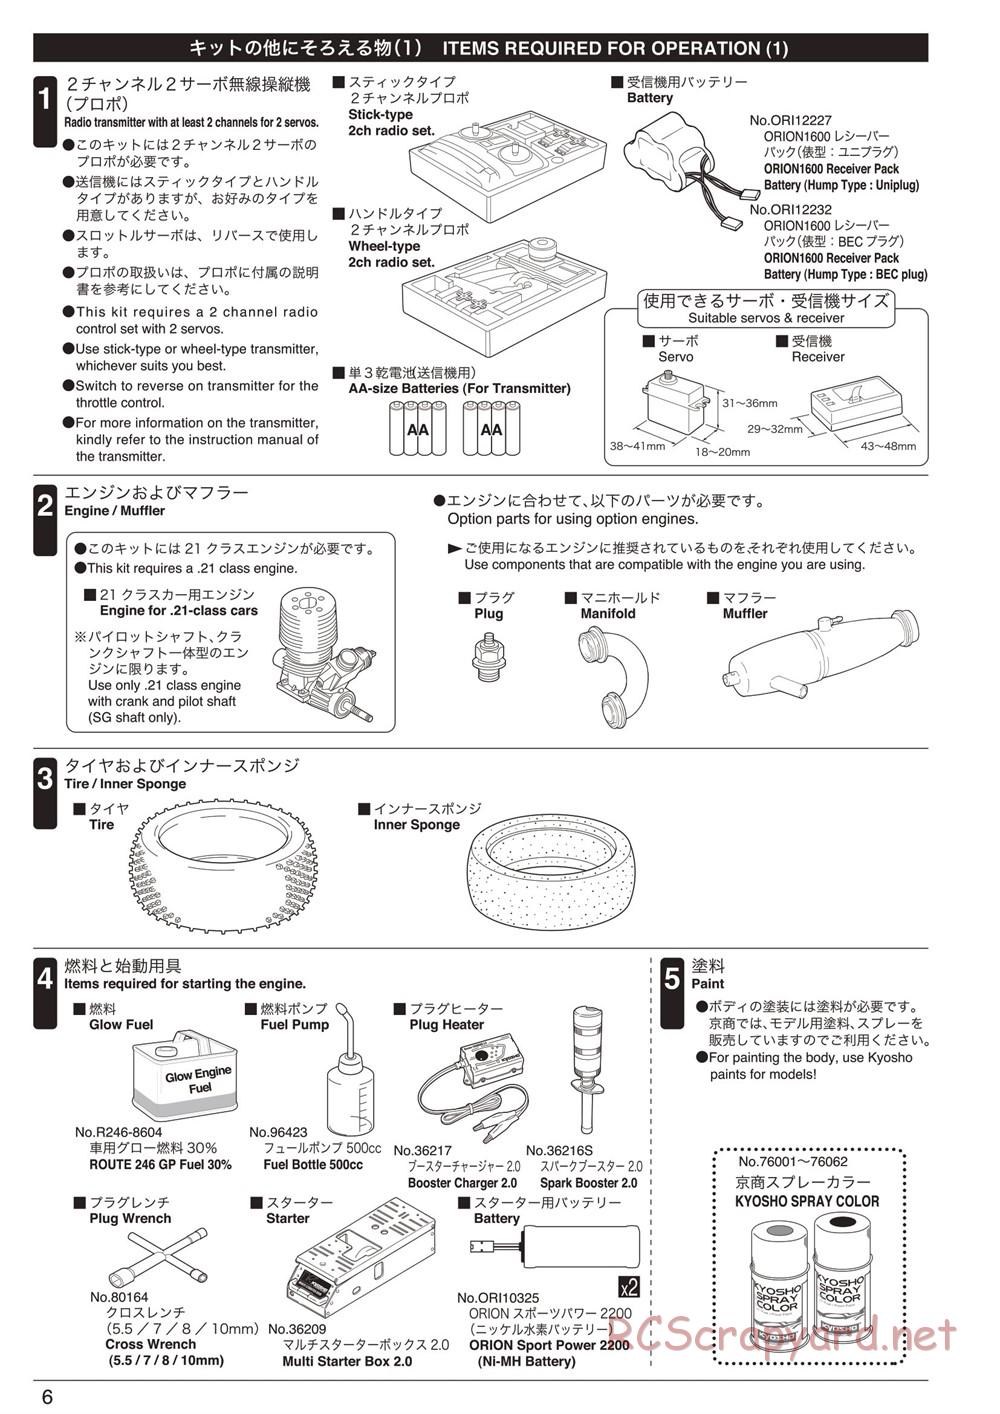 Kyosho - Inferno MP9 TKI3 - Manual - Page 6